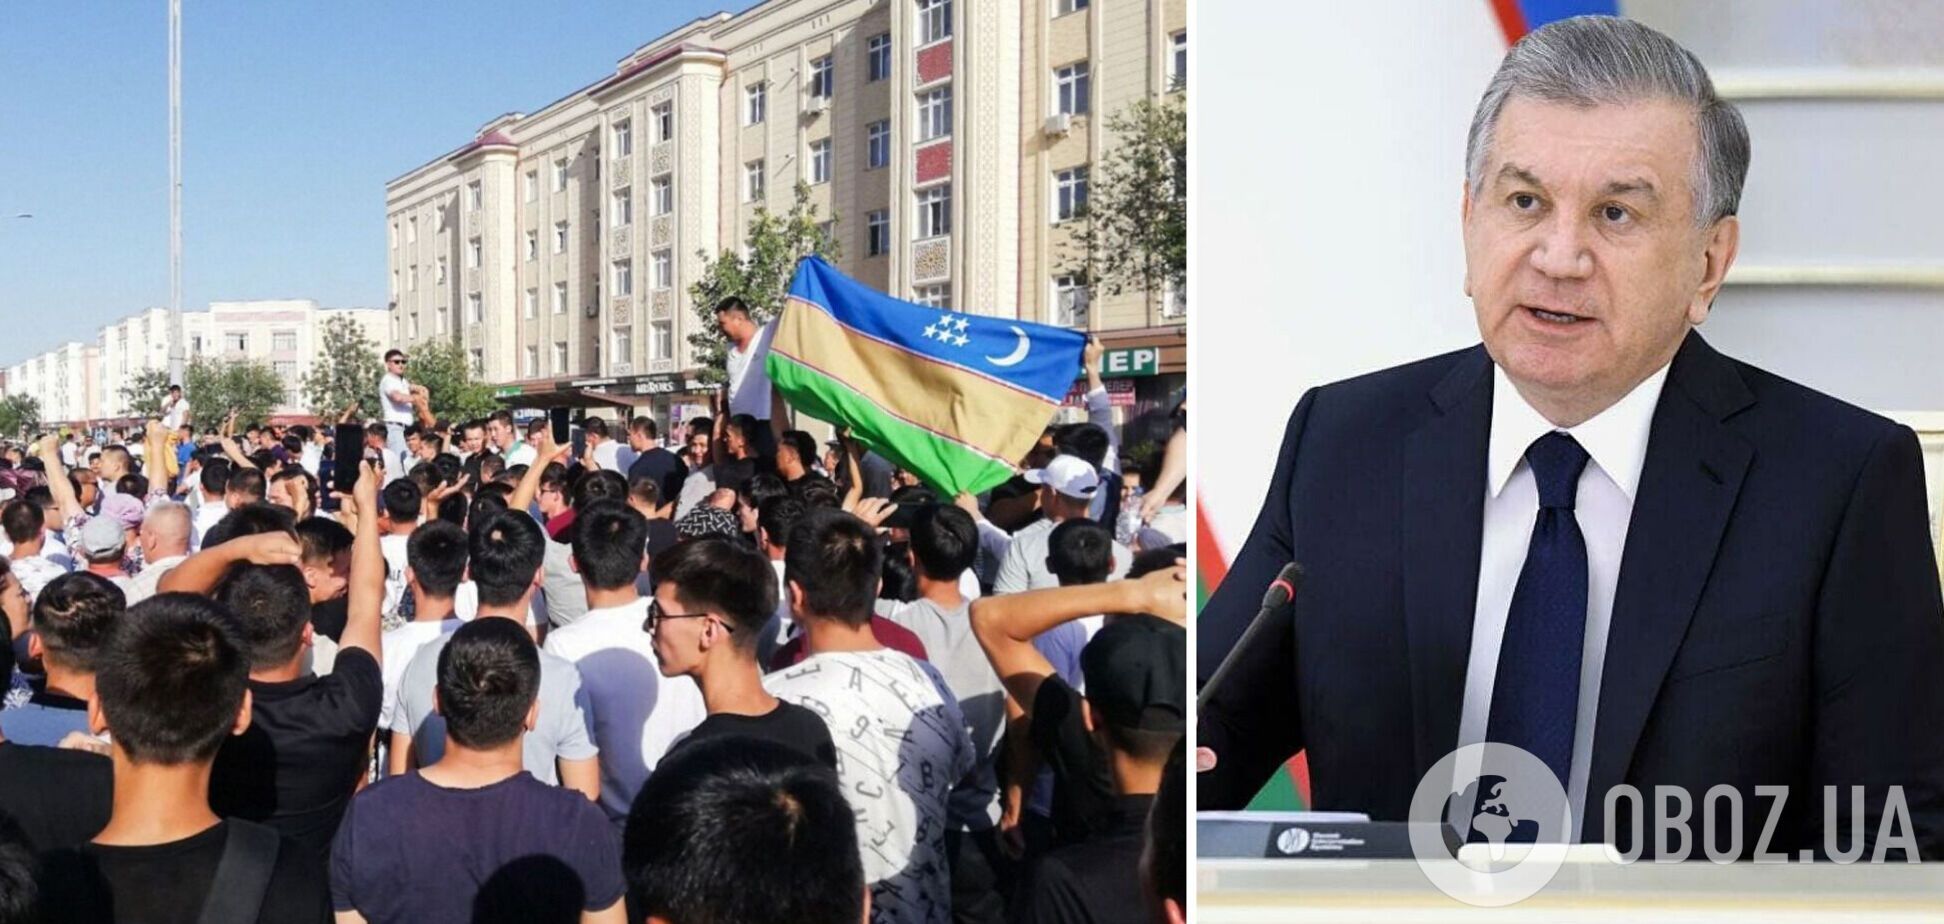 Протесты в Узбекистане: президент предложил не вносить поправки в конституцию в части суверенитета Каракалпакстана